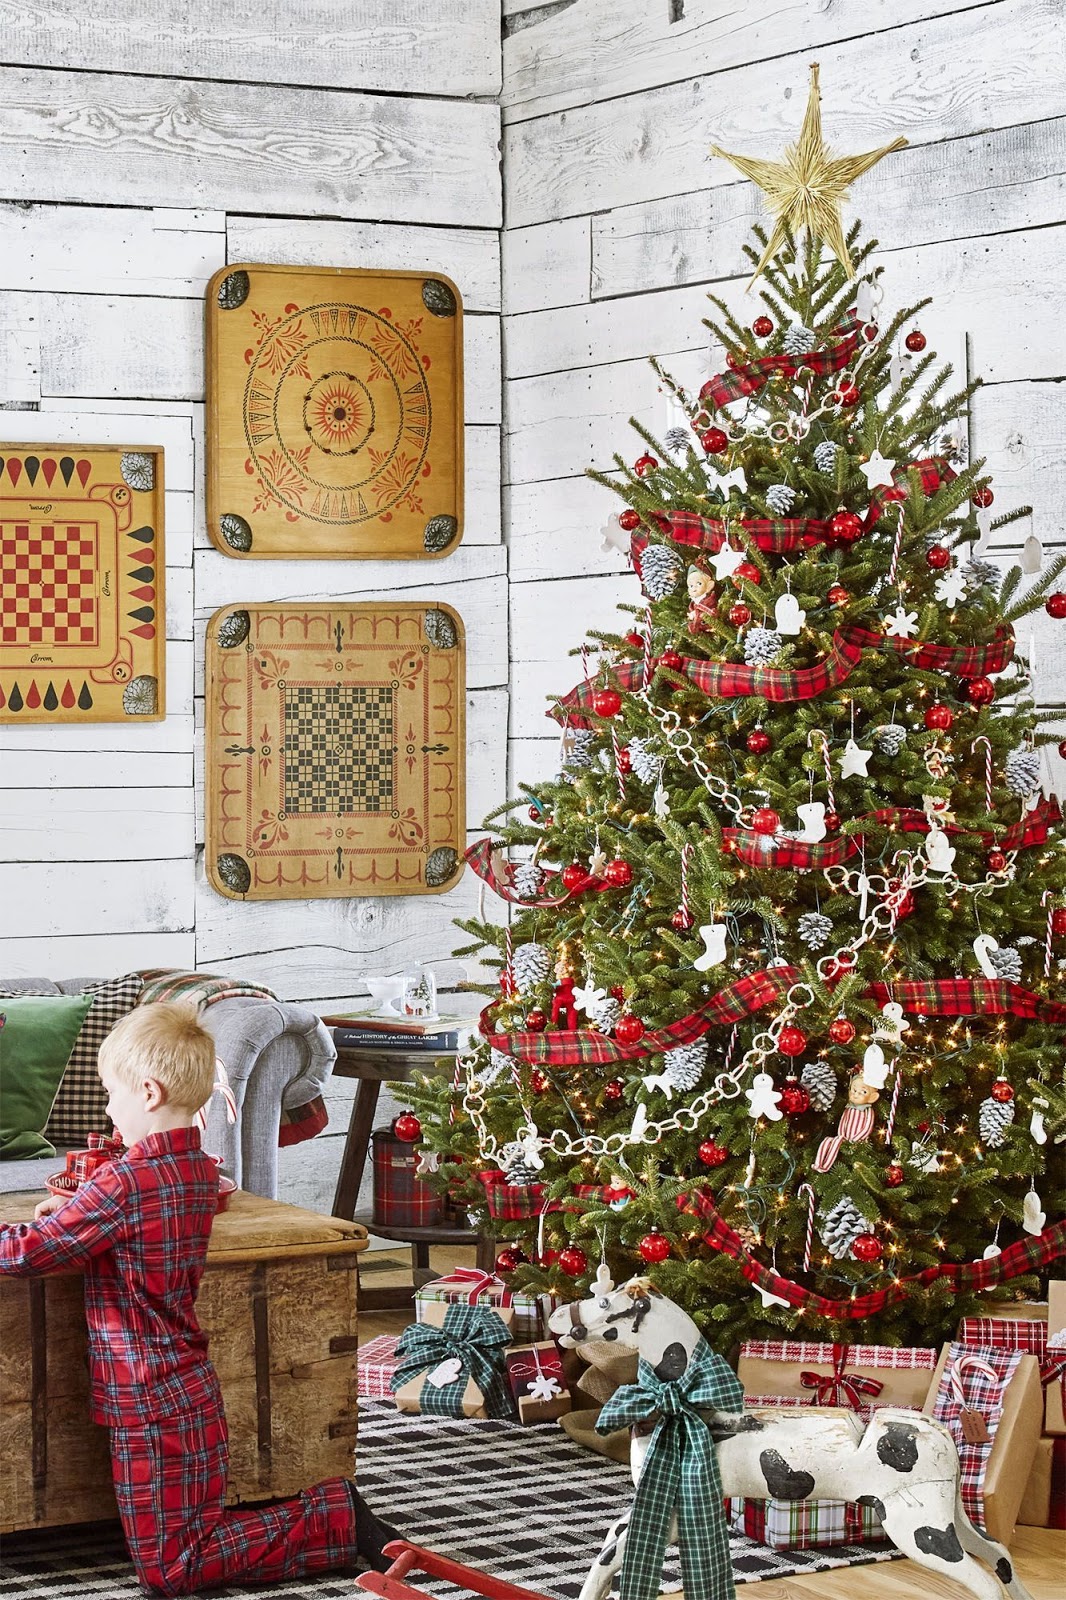 RETRO KIMMER'S BLOG: 12 GORGEOUS CHRISTMAS TREE DESIGNS FOR 2019